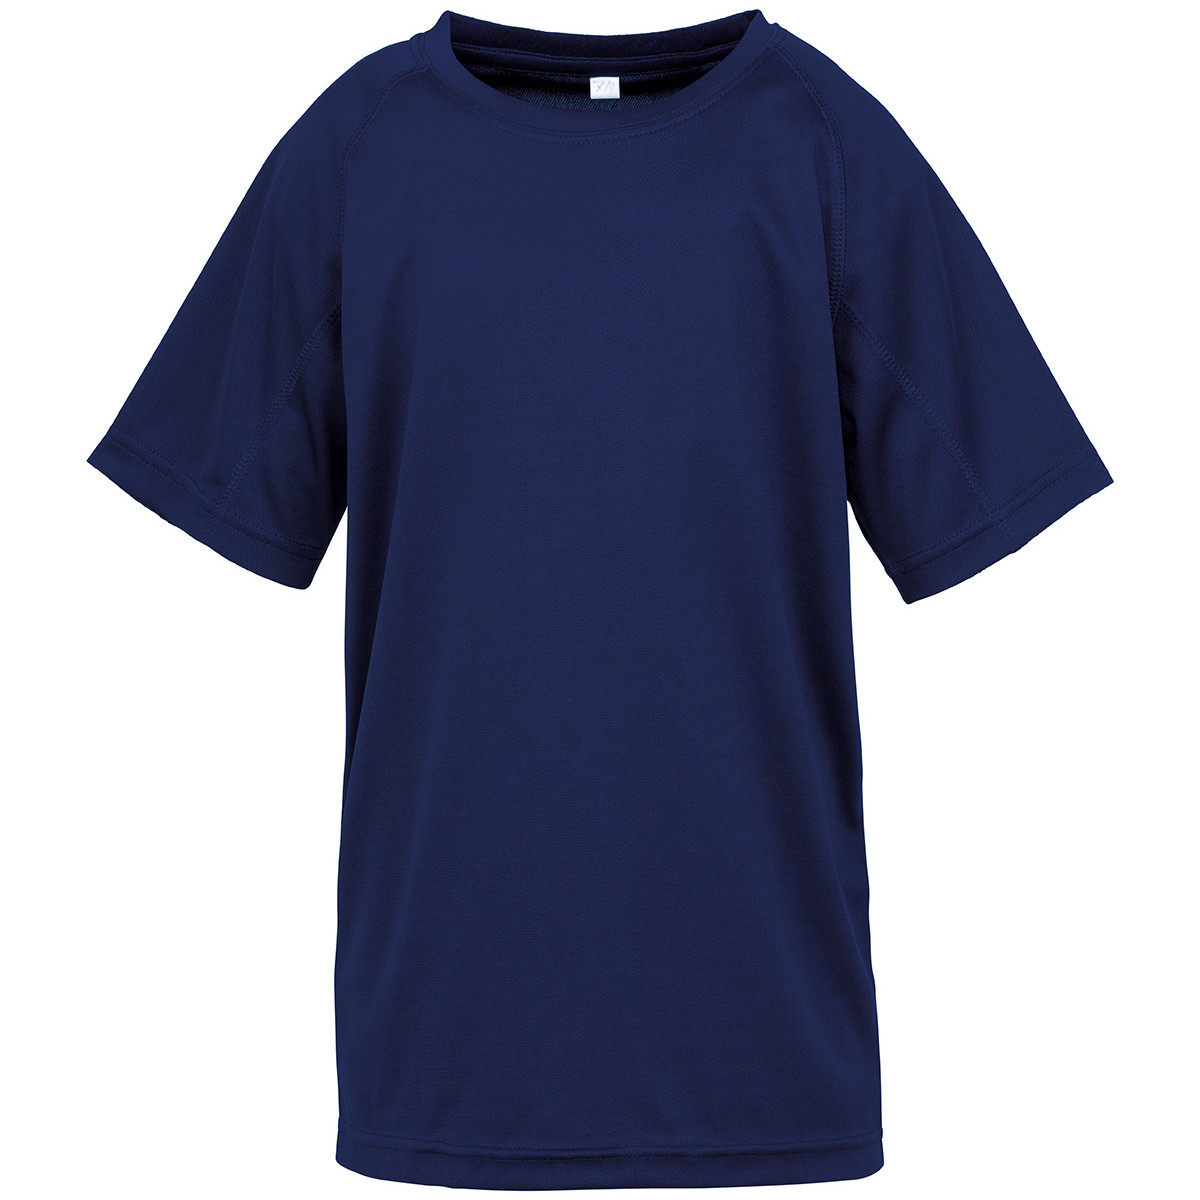 Vêtements Garçon T-shirts manches longues Spiro Performance Aircool Bleu